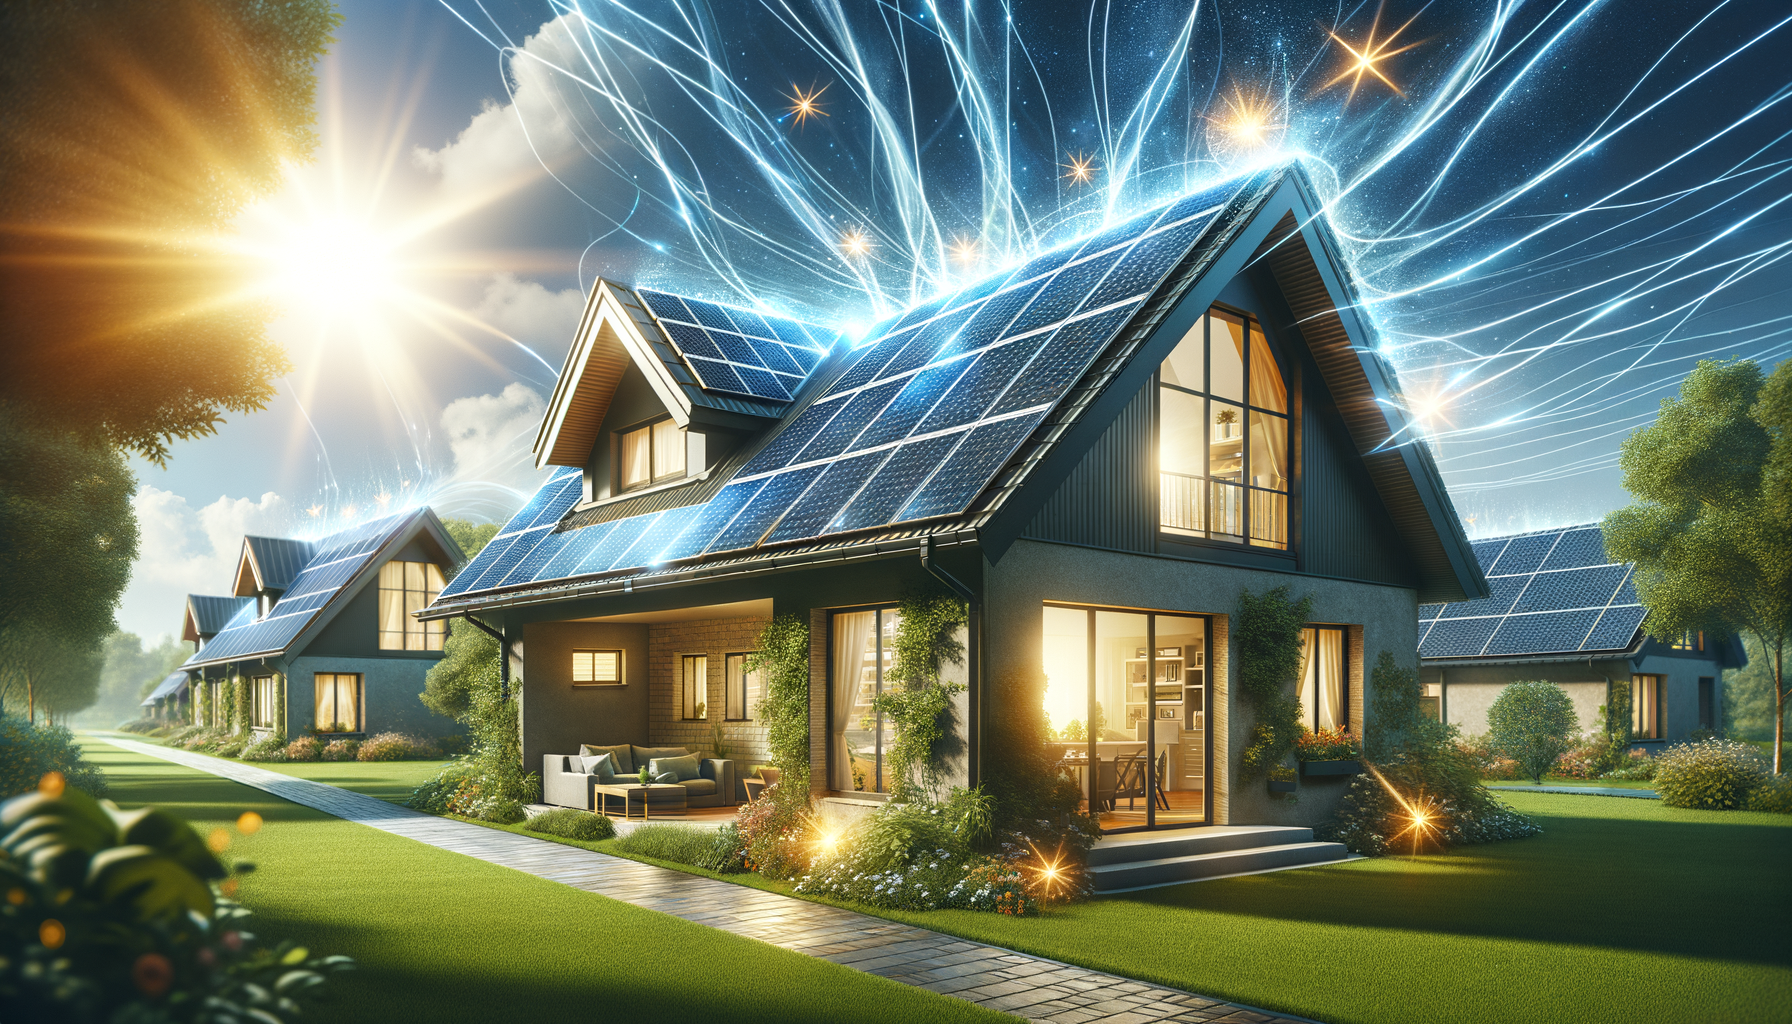 ALT: Home solar panels